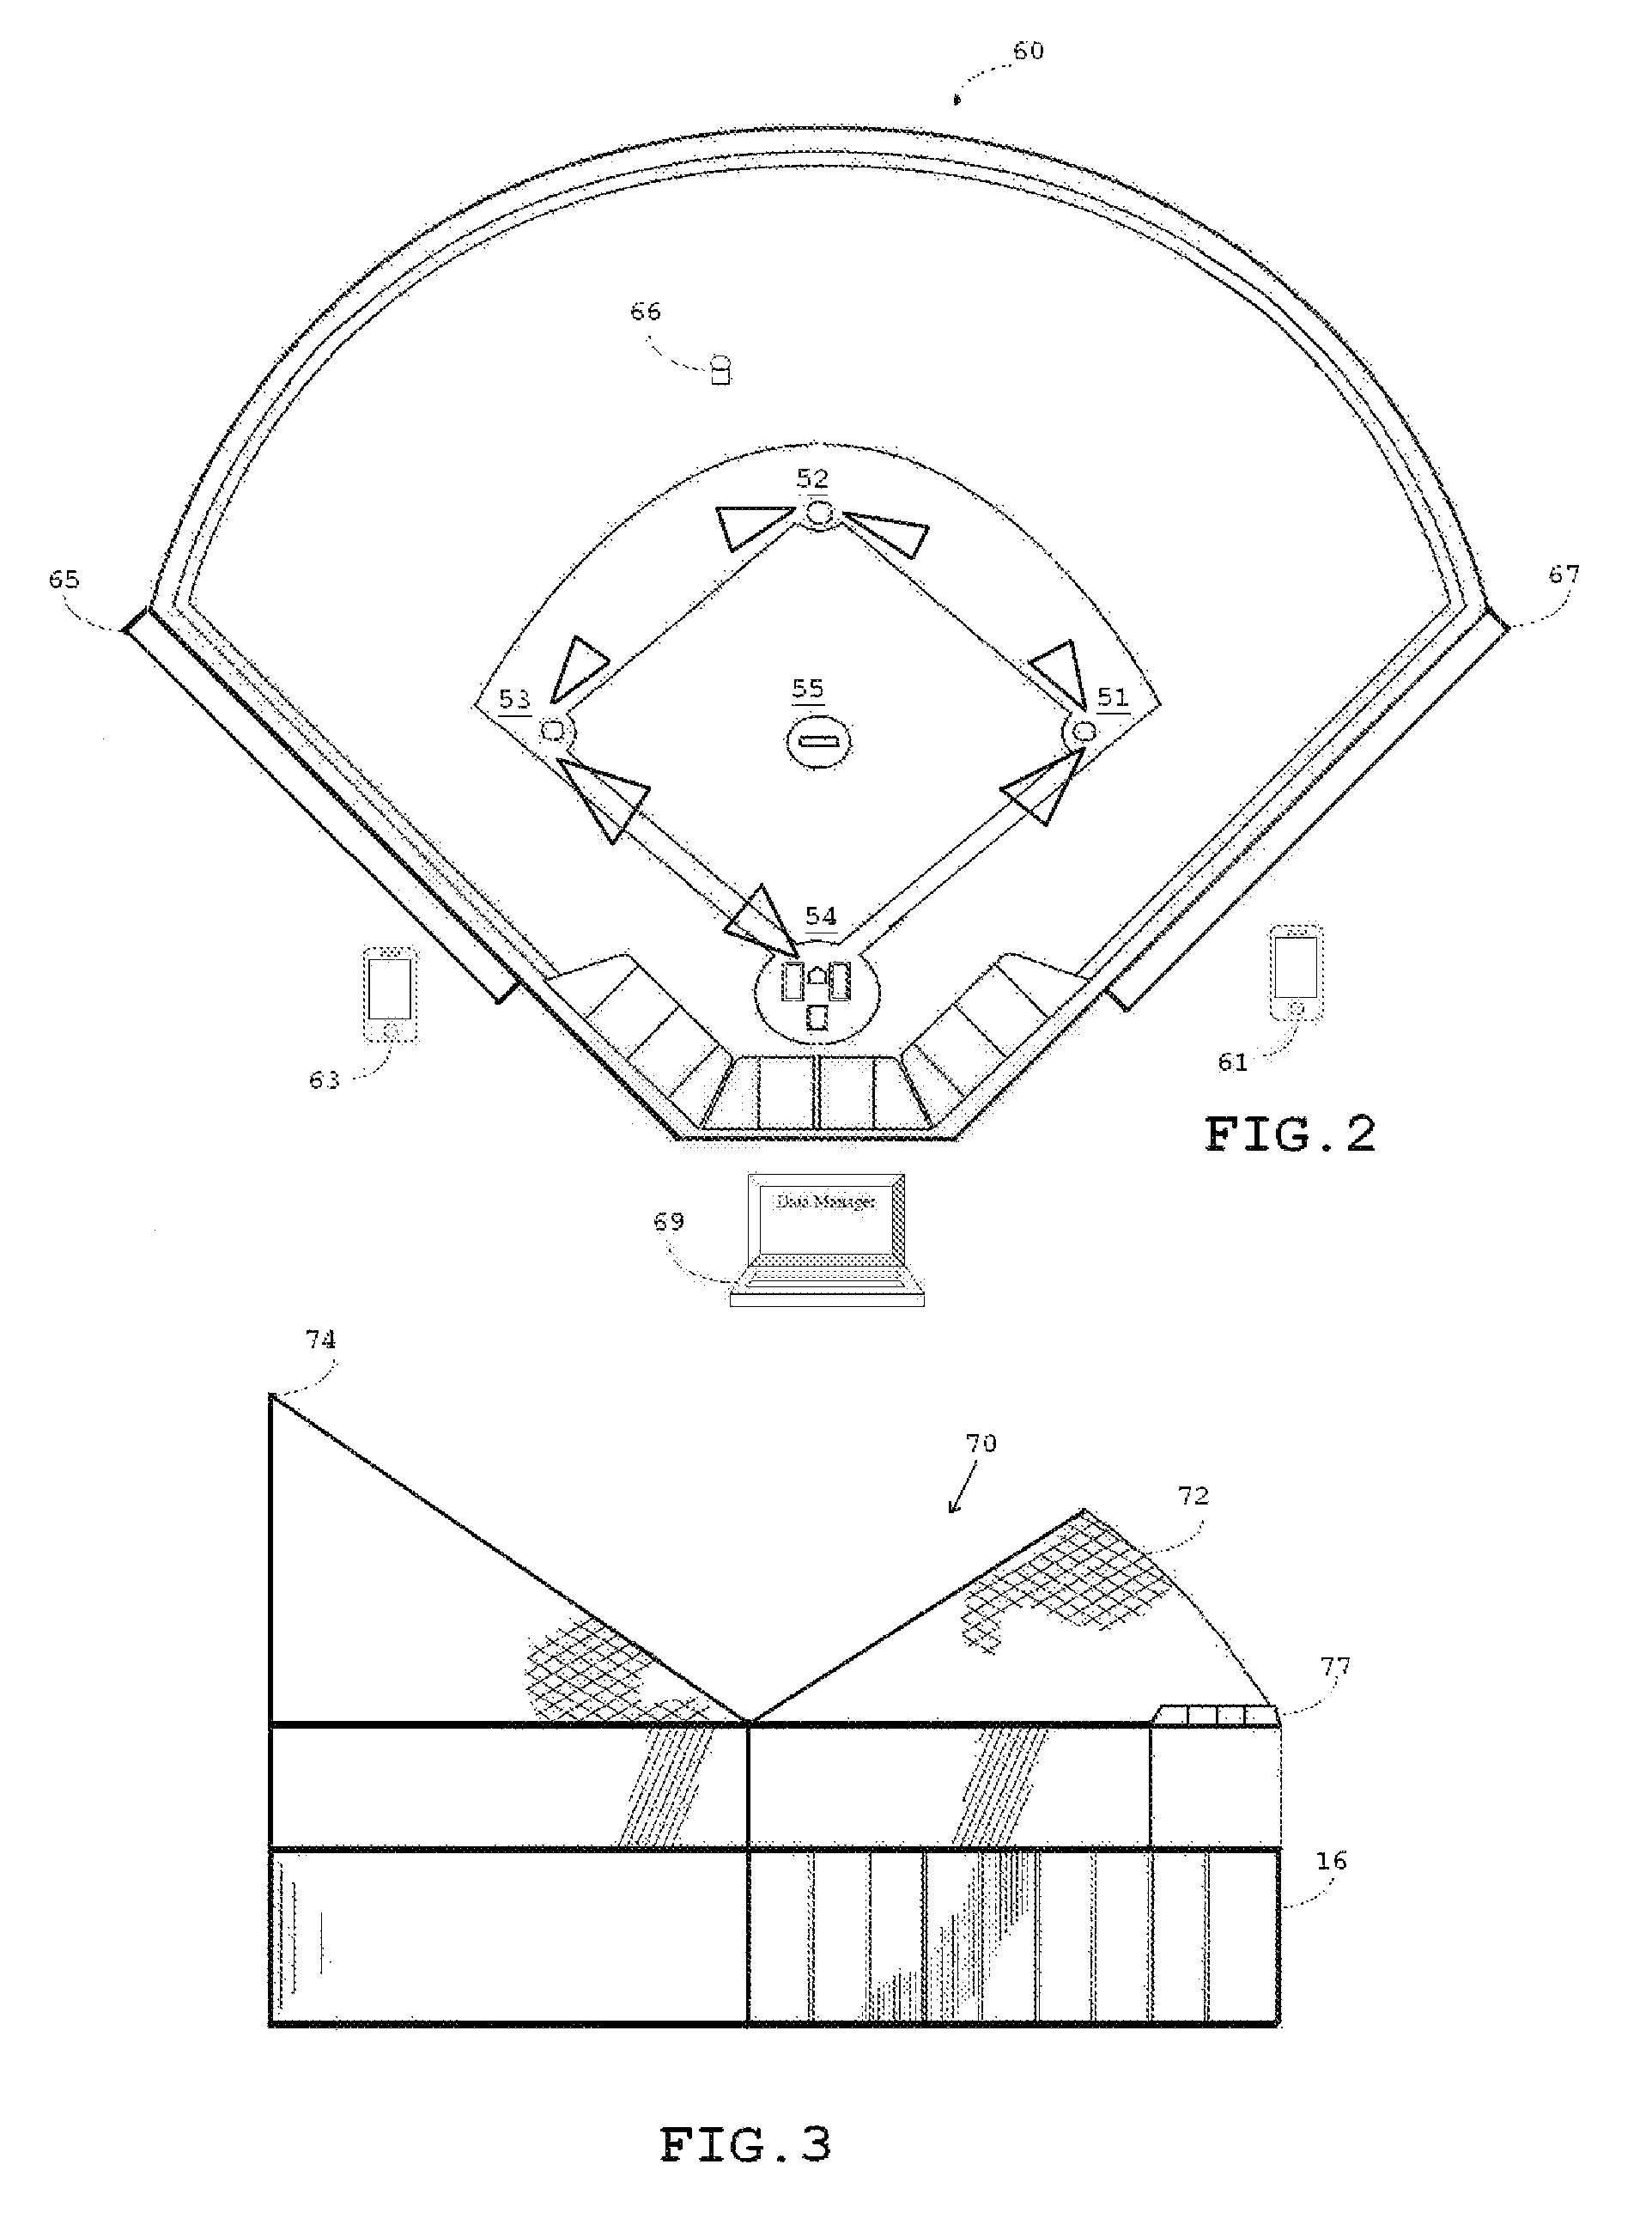 Arena baseball game system